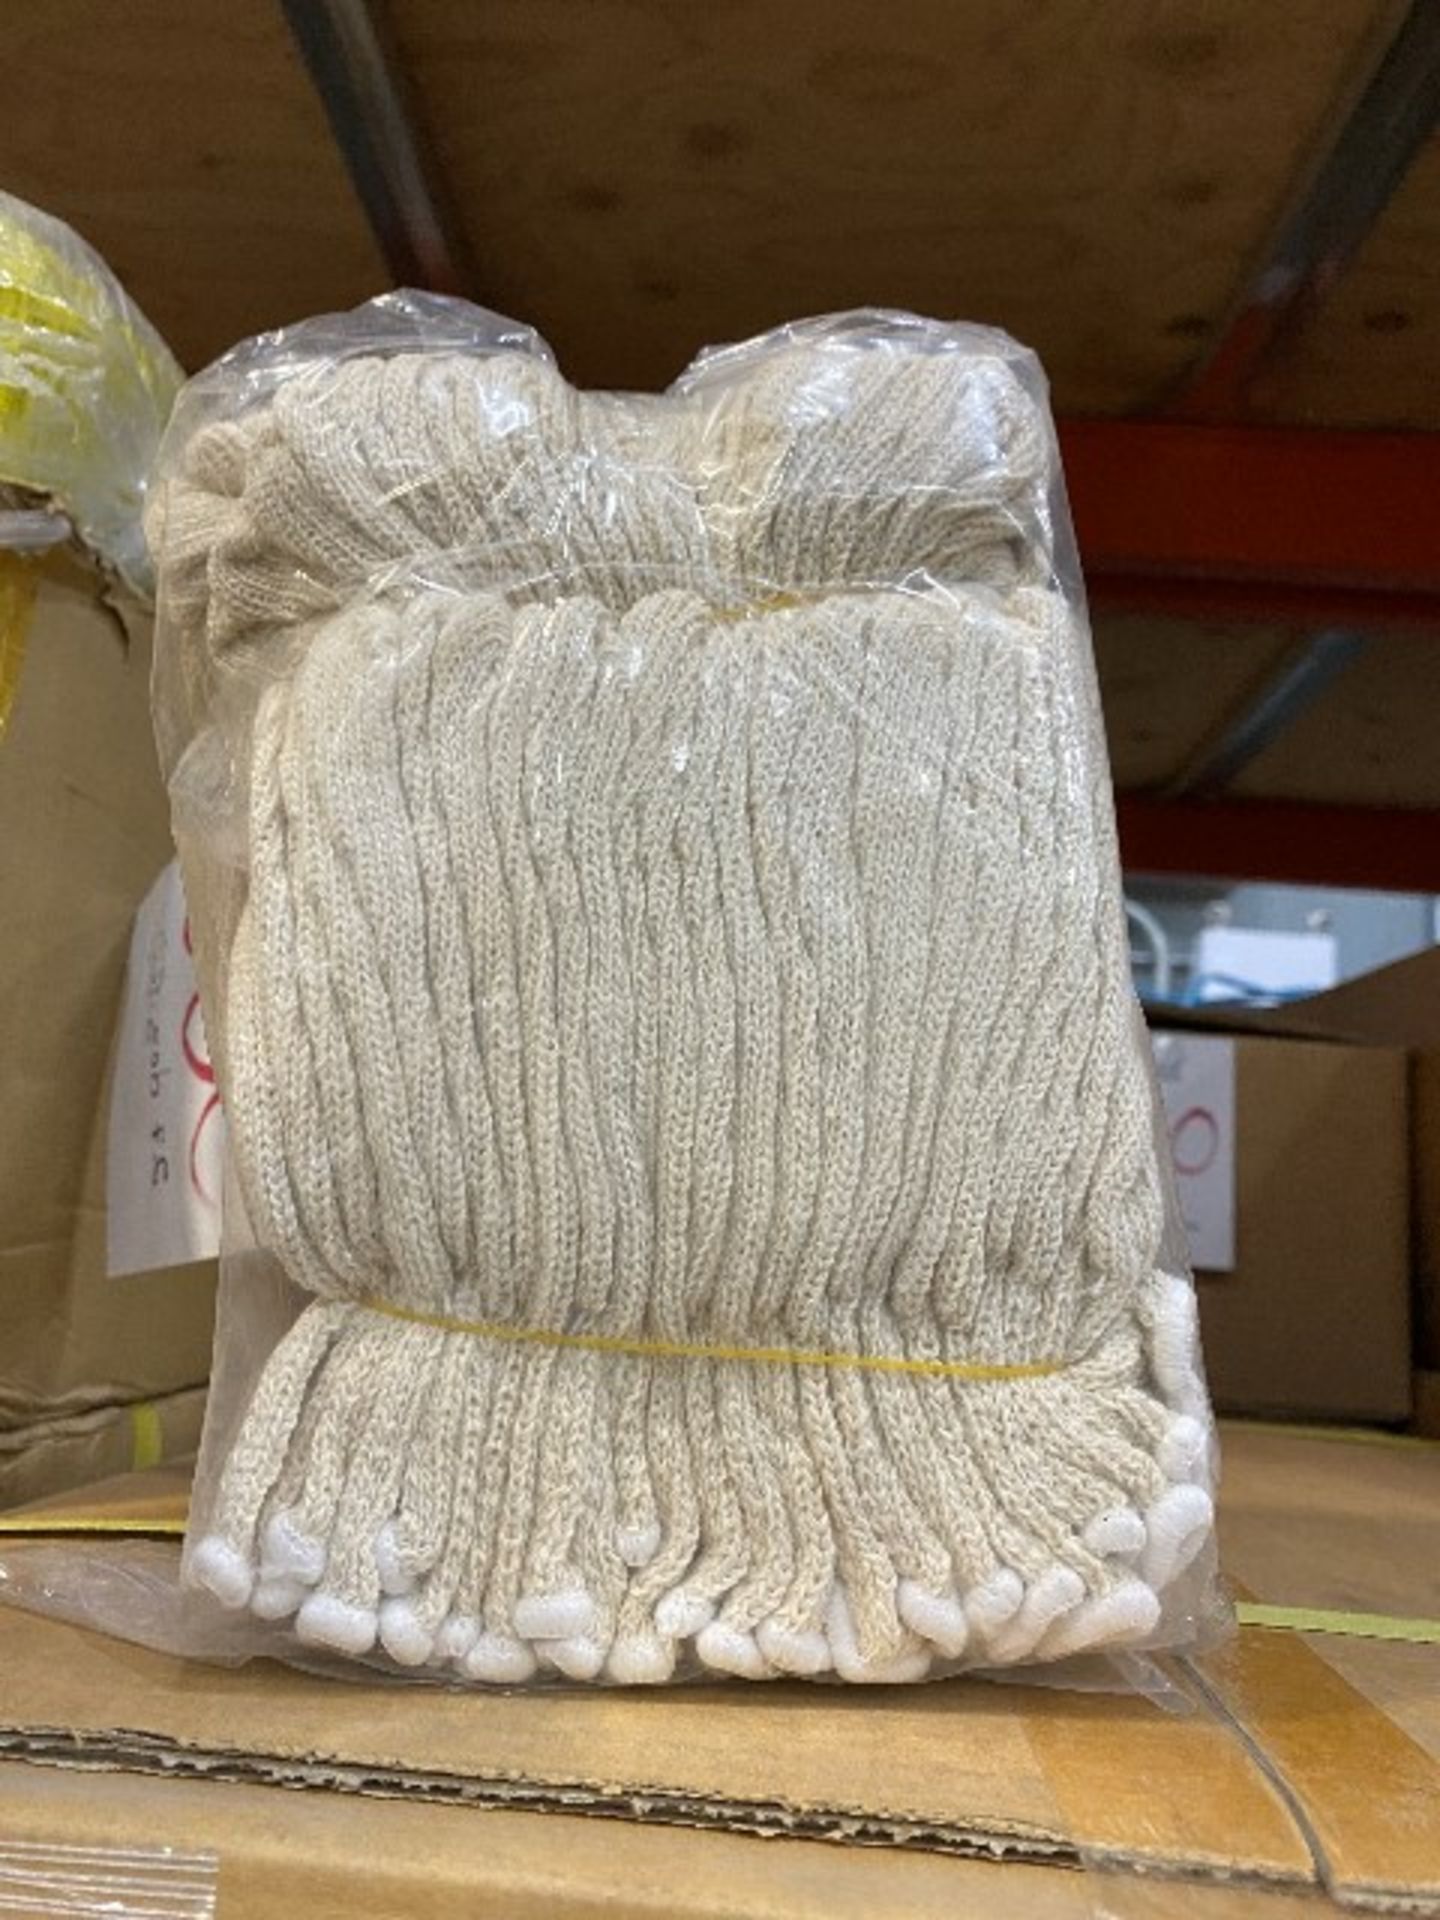 Superior Sure-Knit string knit, cotton/poly blend,size: x-large, 20 dozens